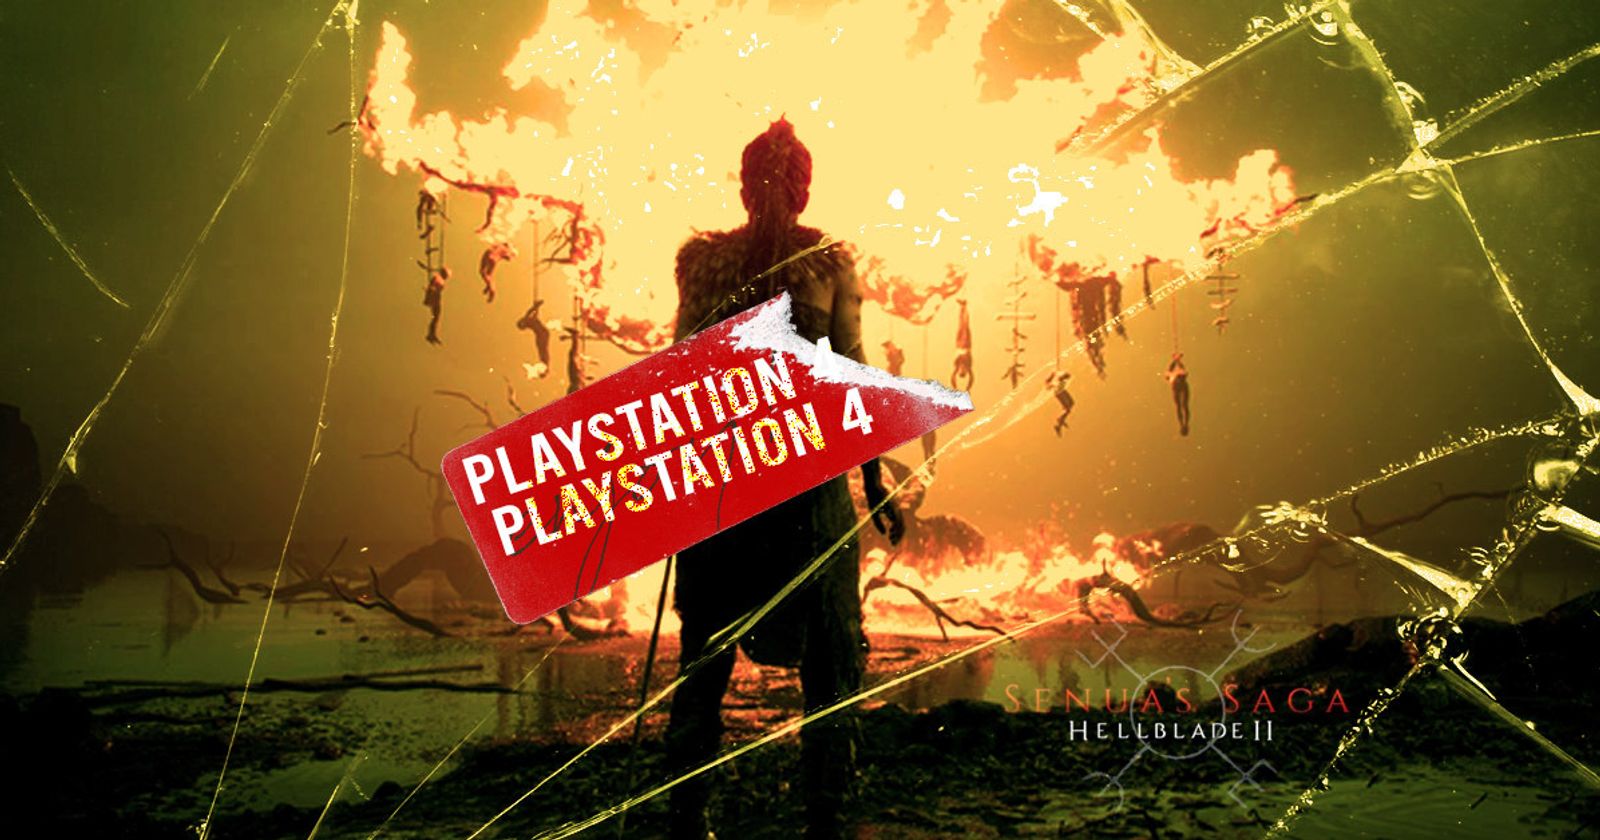 Why Senua's Saga: Hellblade 2 Deserves a PlayStation Release